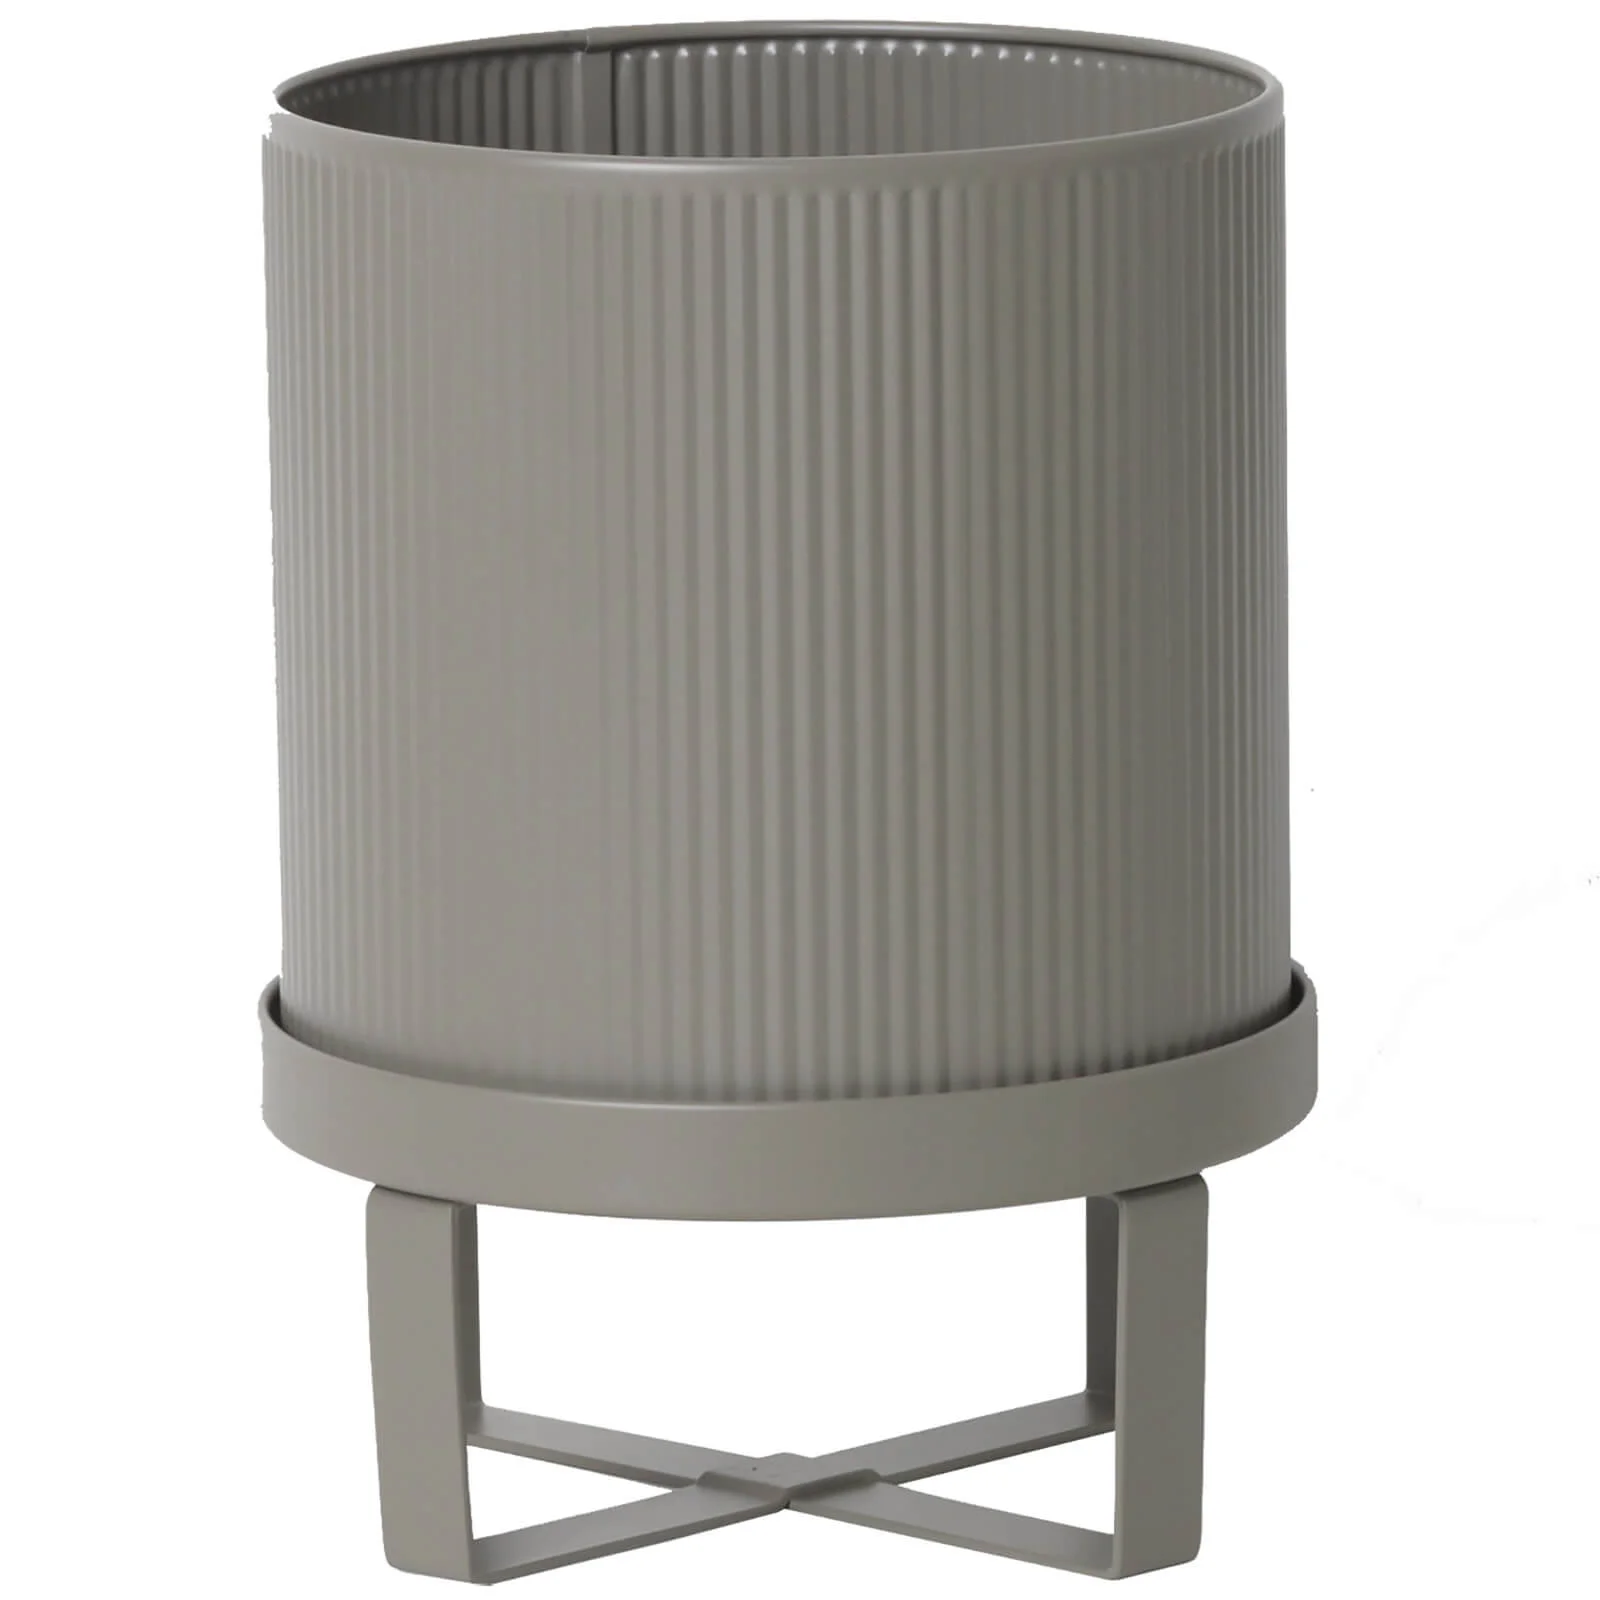 Ferm Living Bau Pot - Small - Warm Grey Image 1